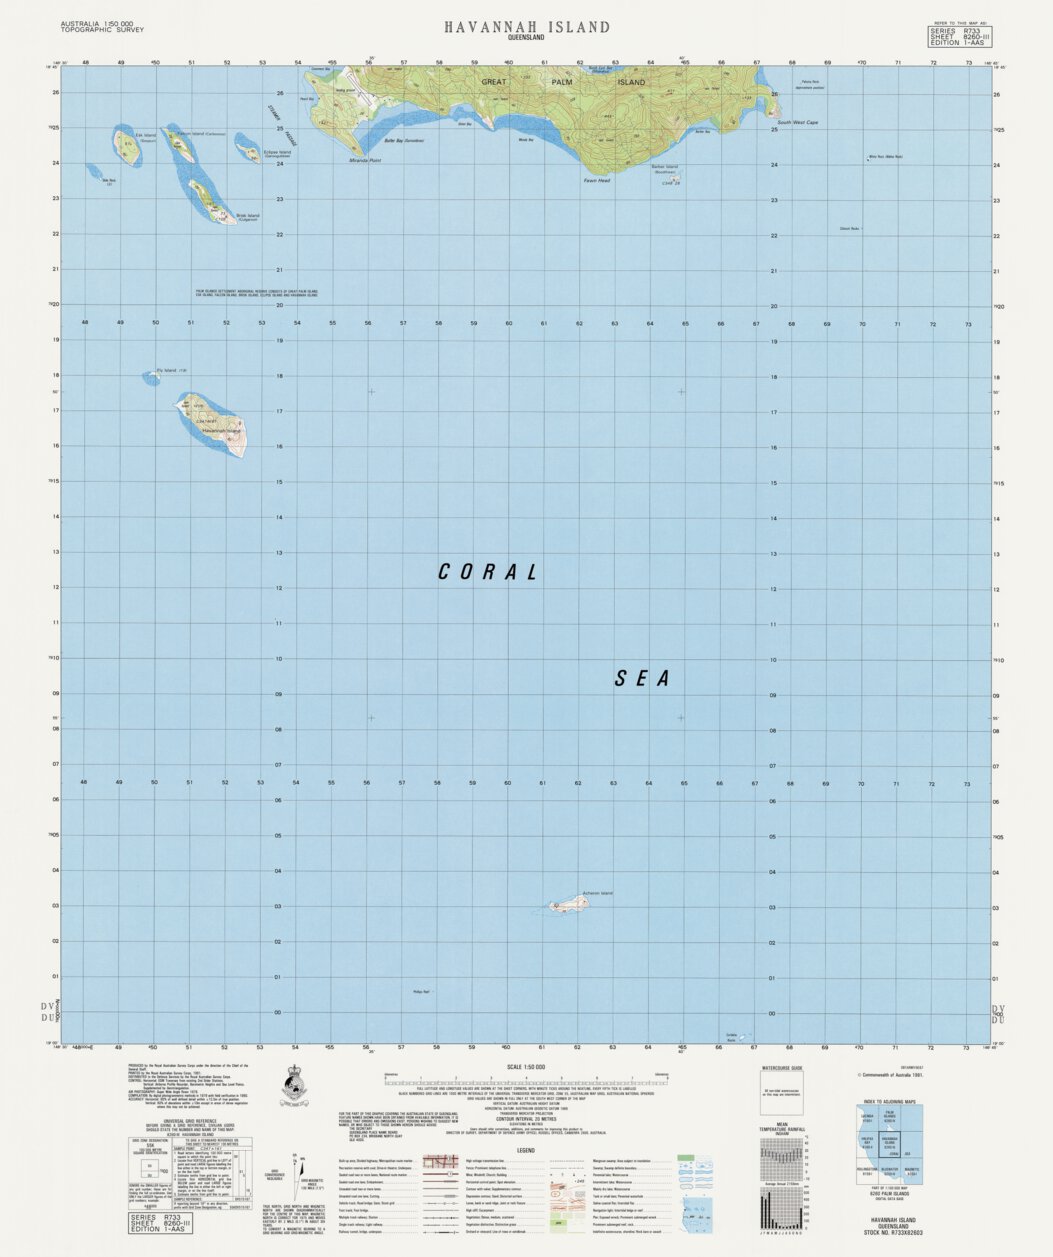 Havannah Island (8260-3) Map by Geoscience Australia | Avenza Maps